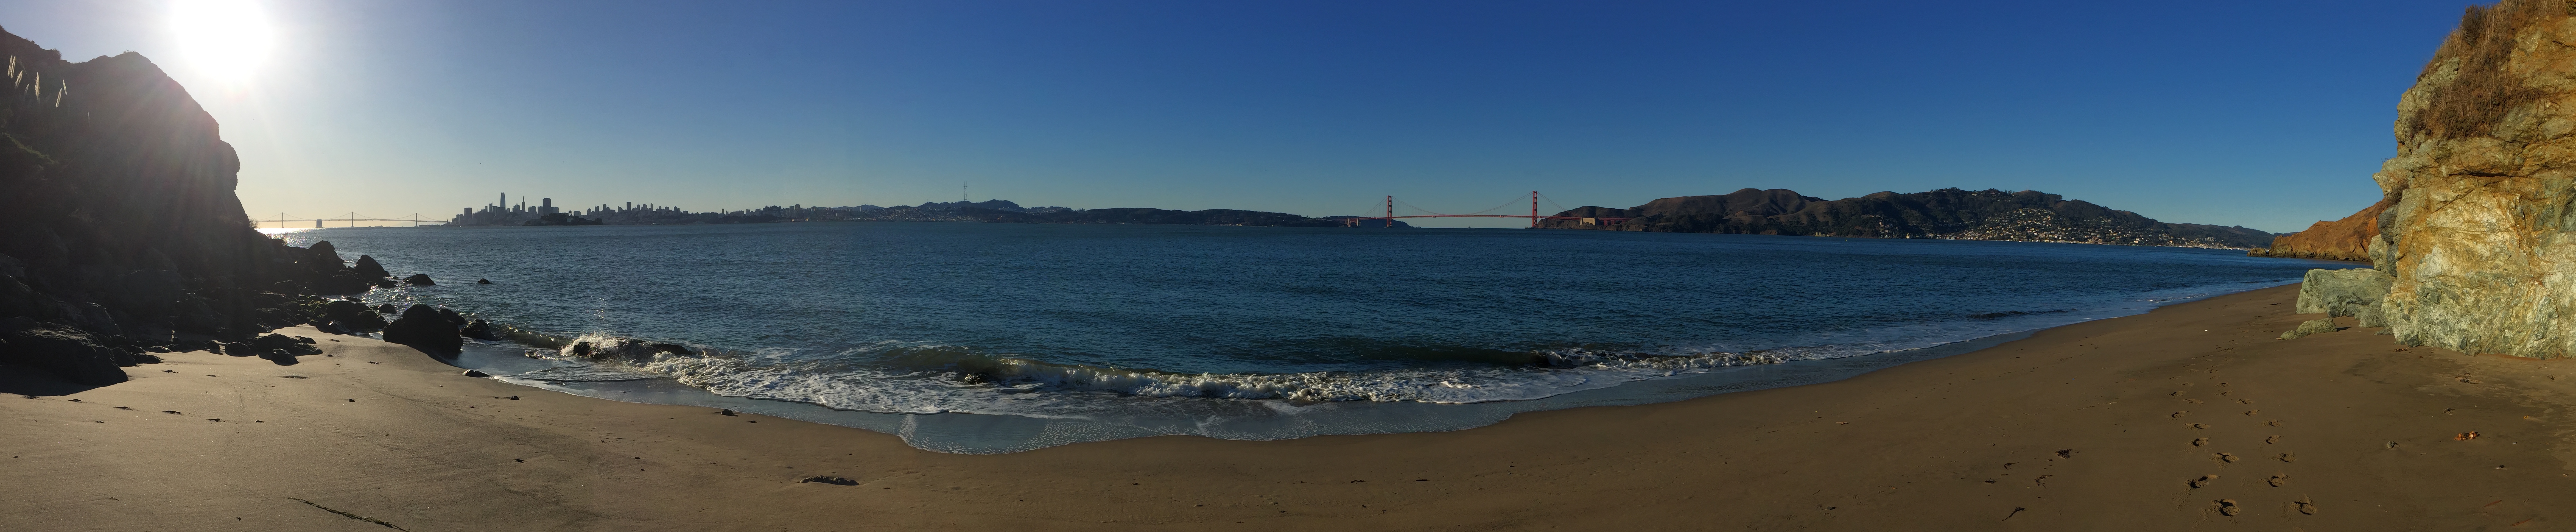 beach panoramic view of SF